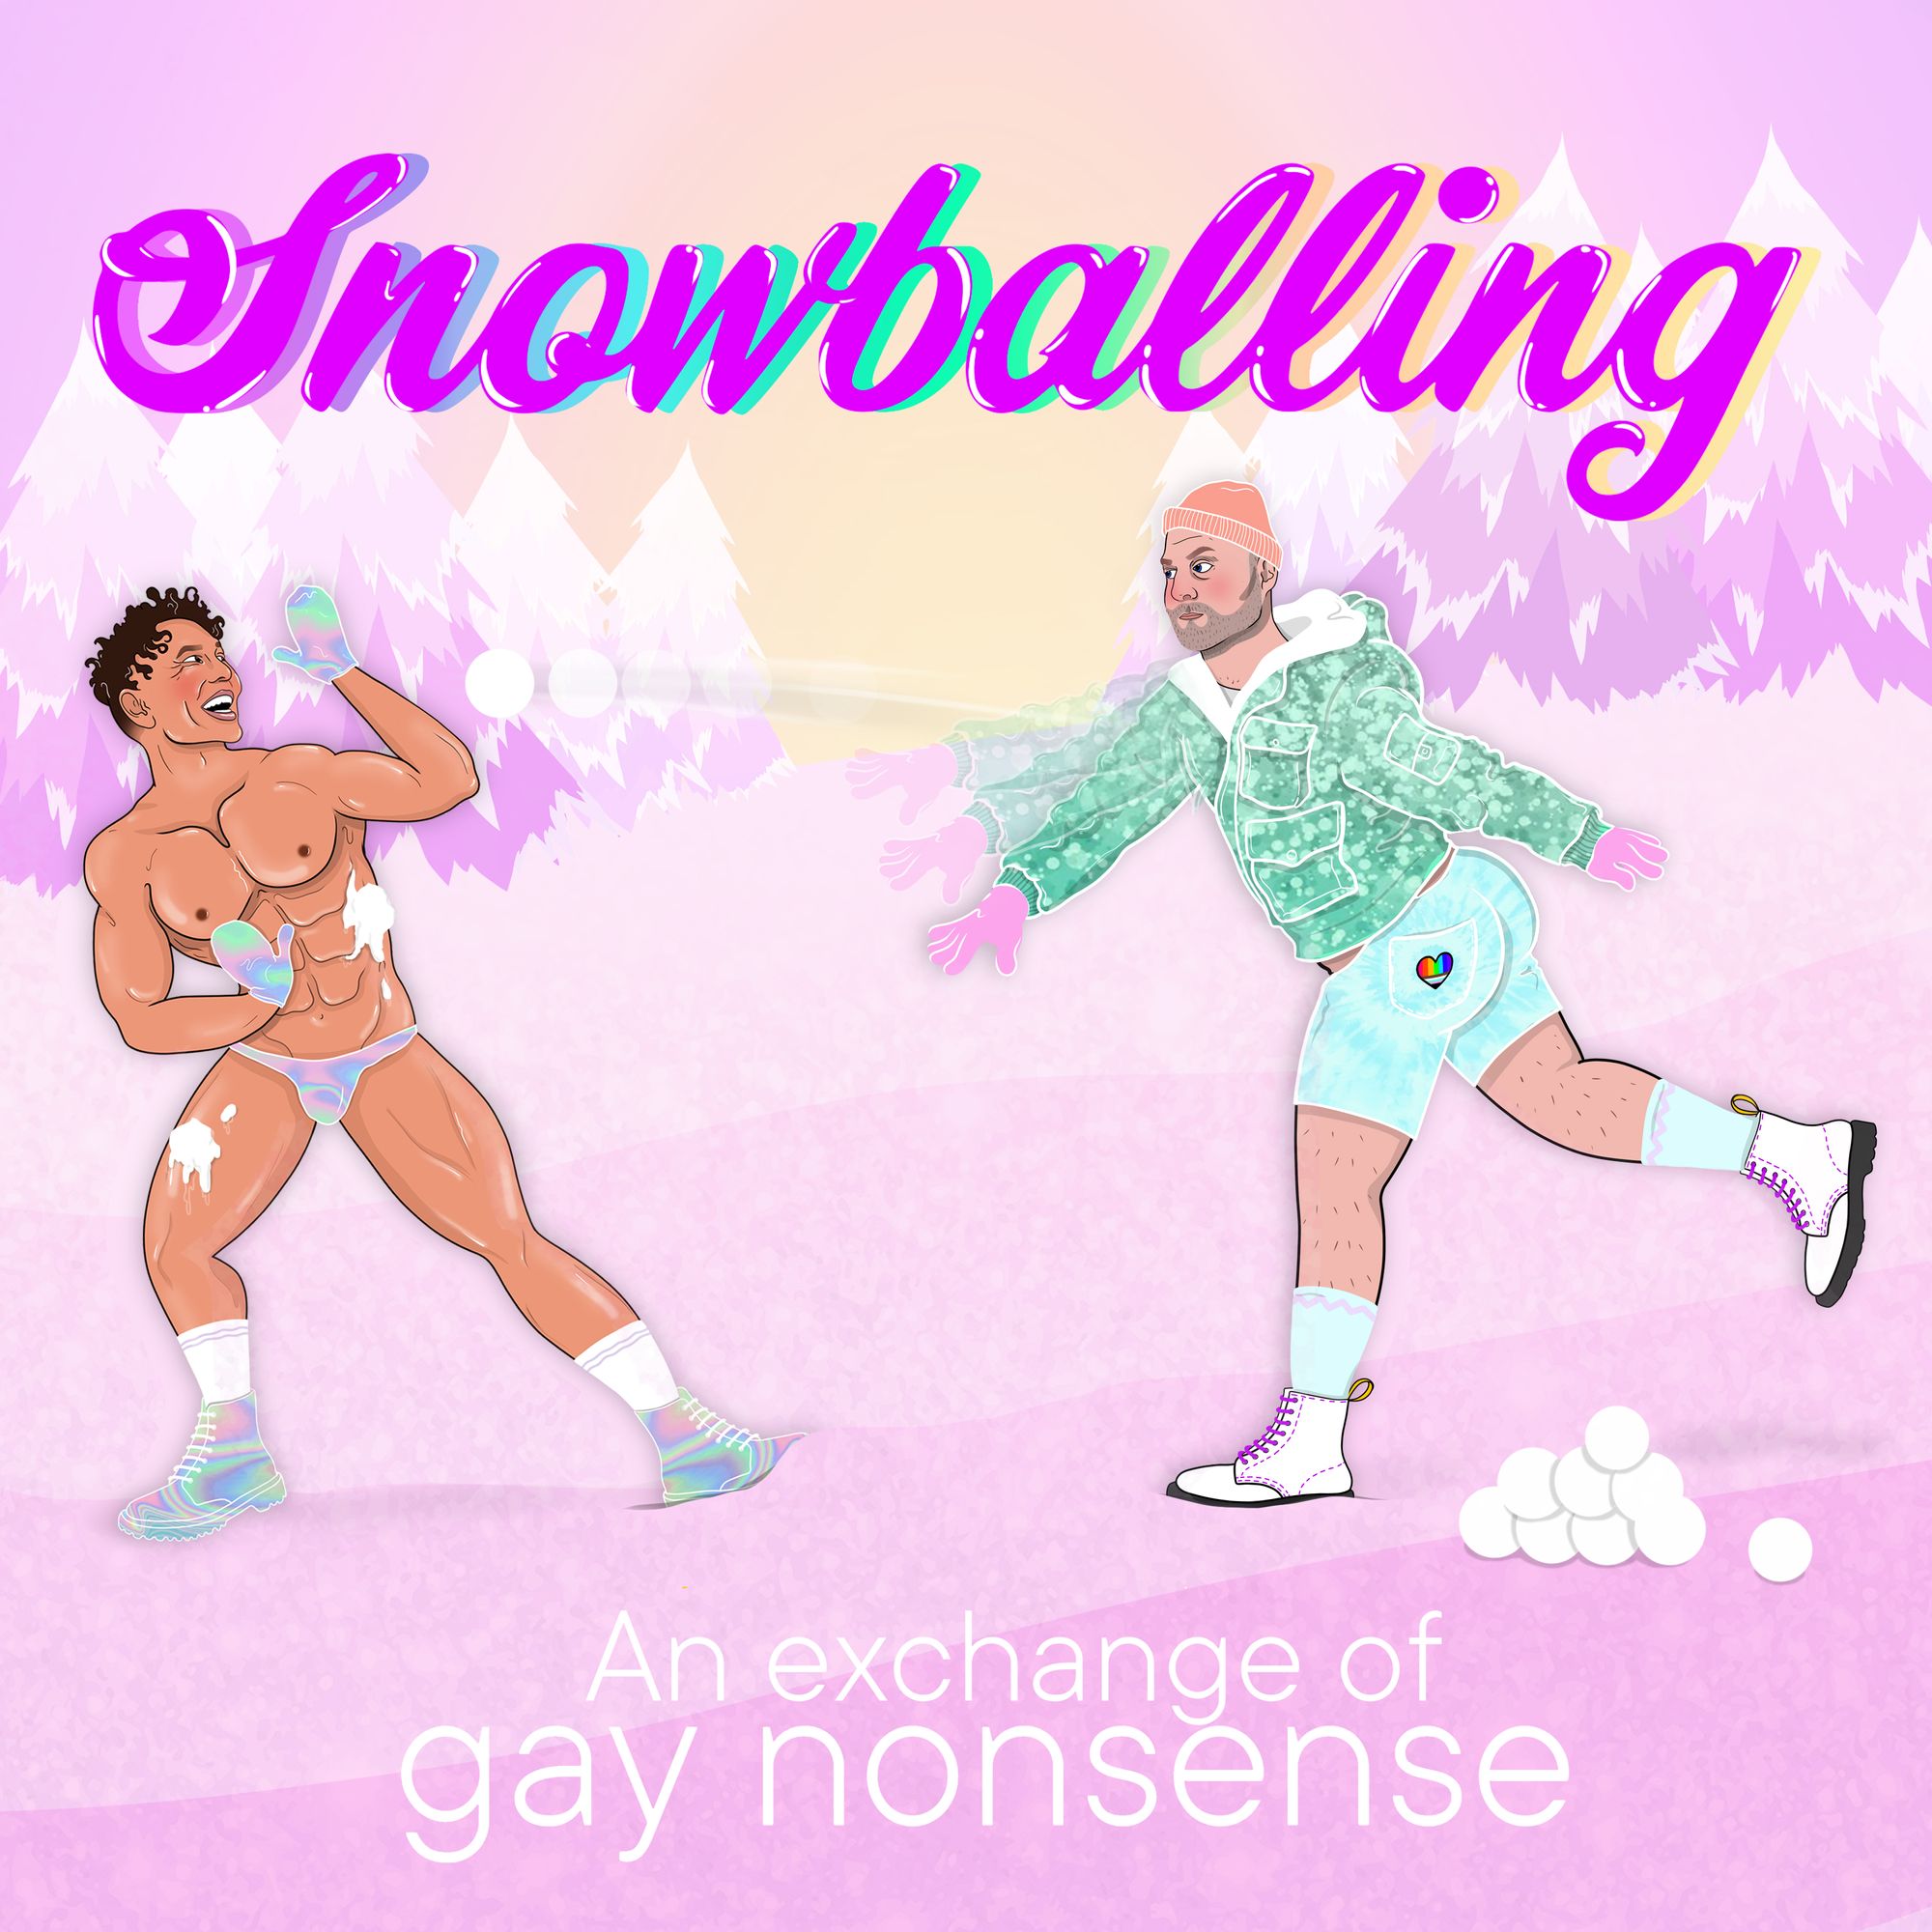 Podcast alert: Snowballing